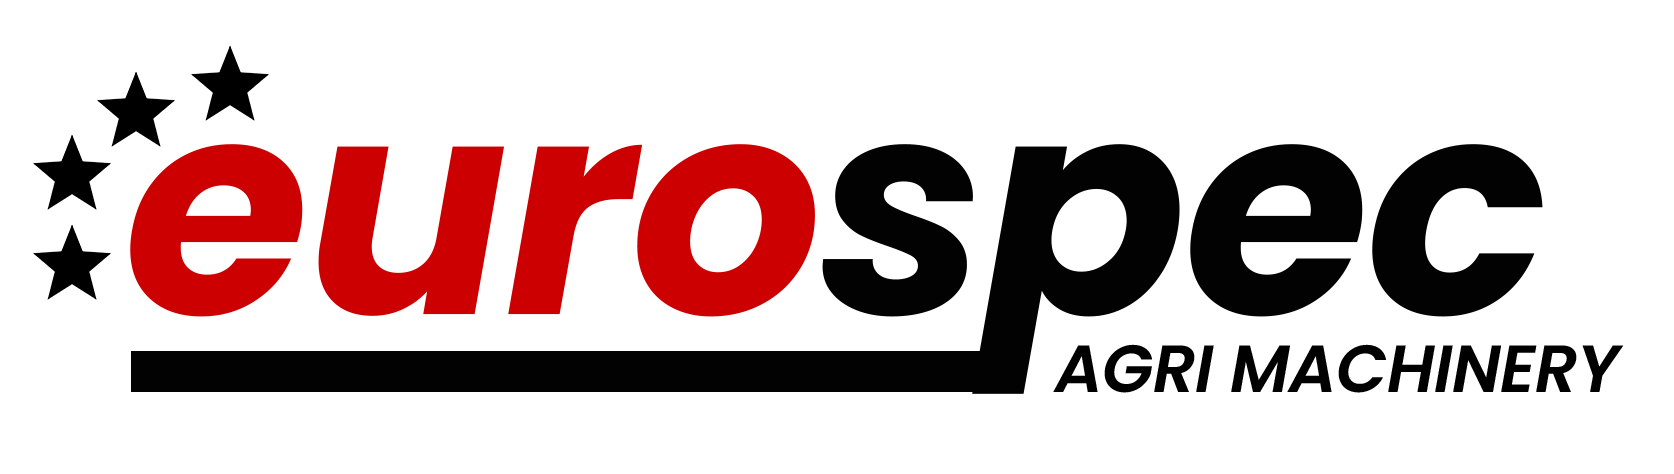 Eurospec New Logo